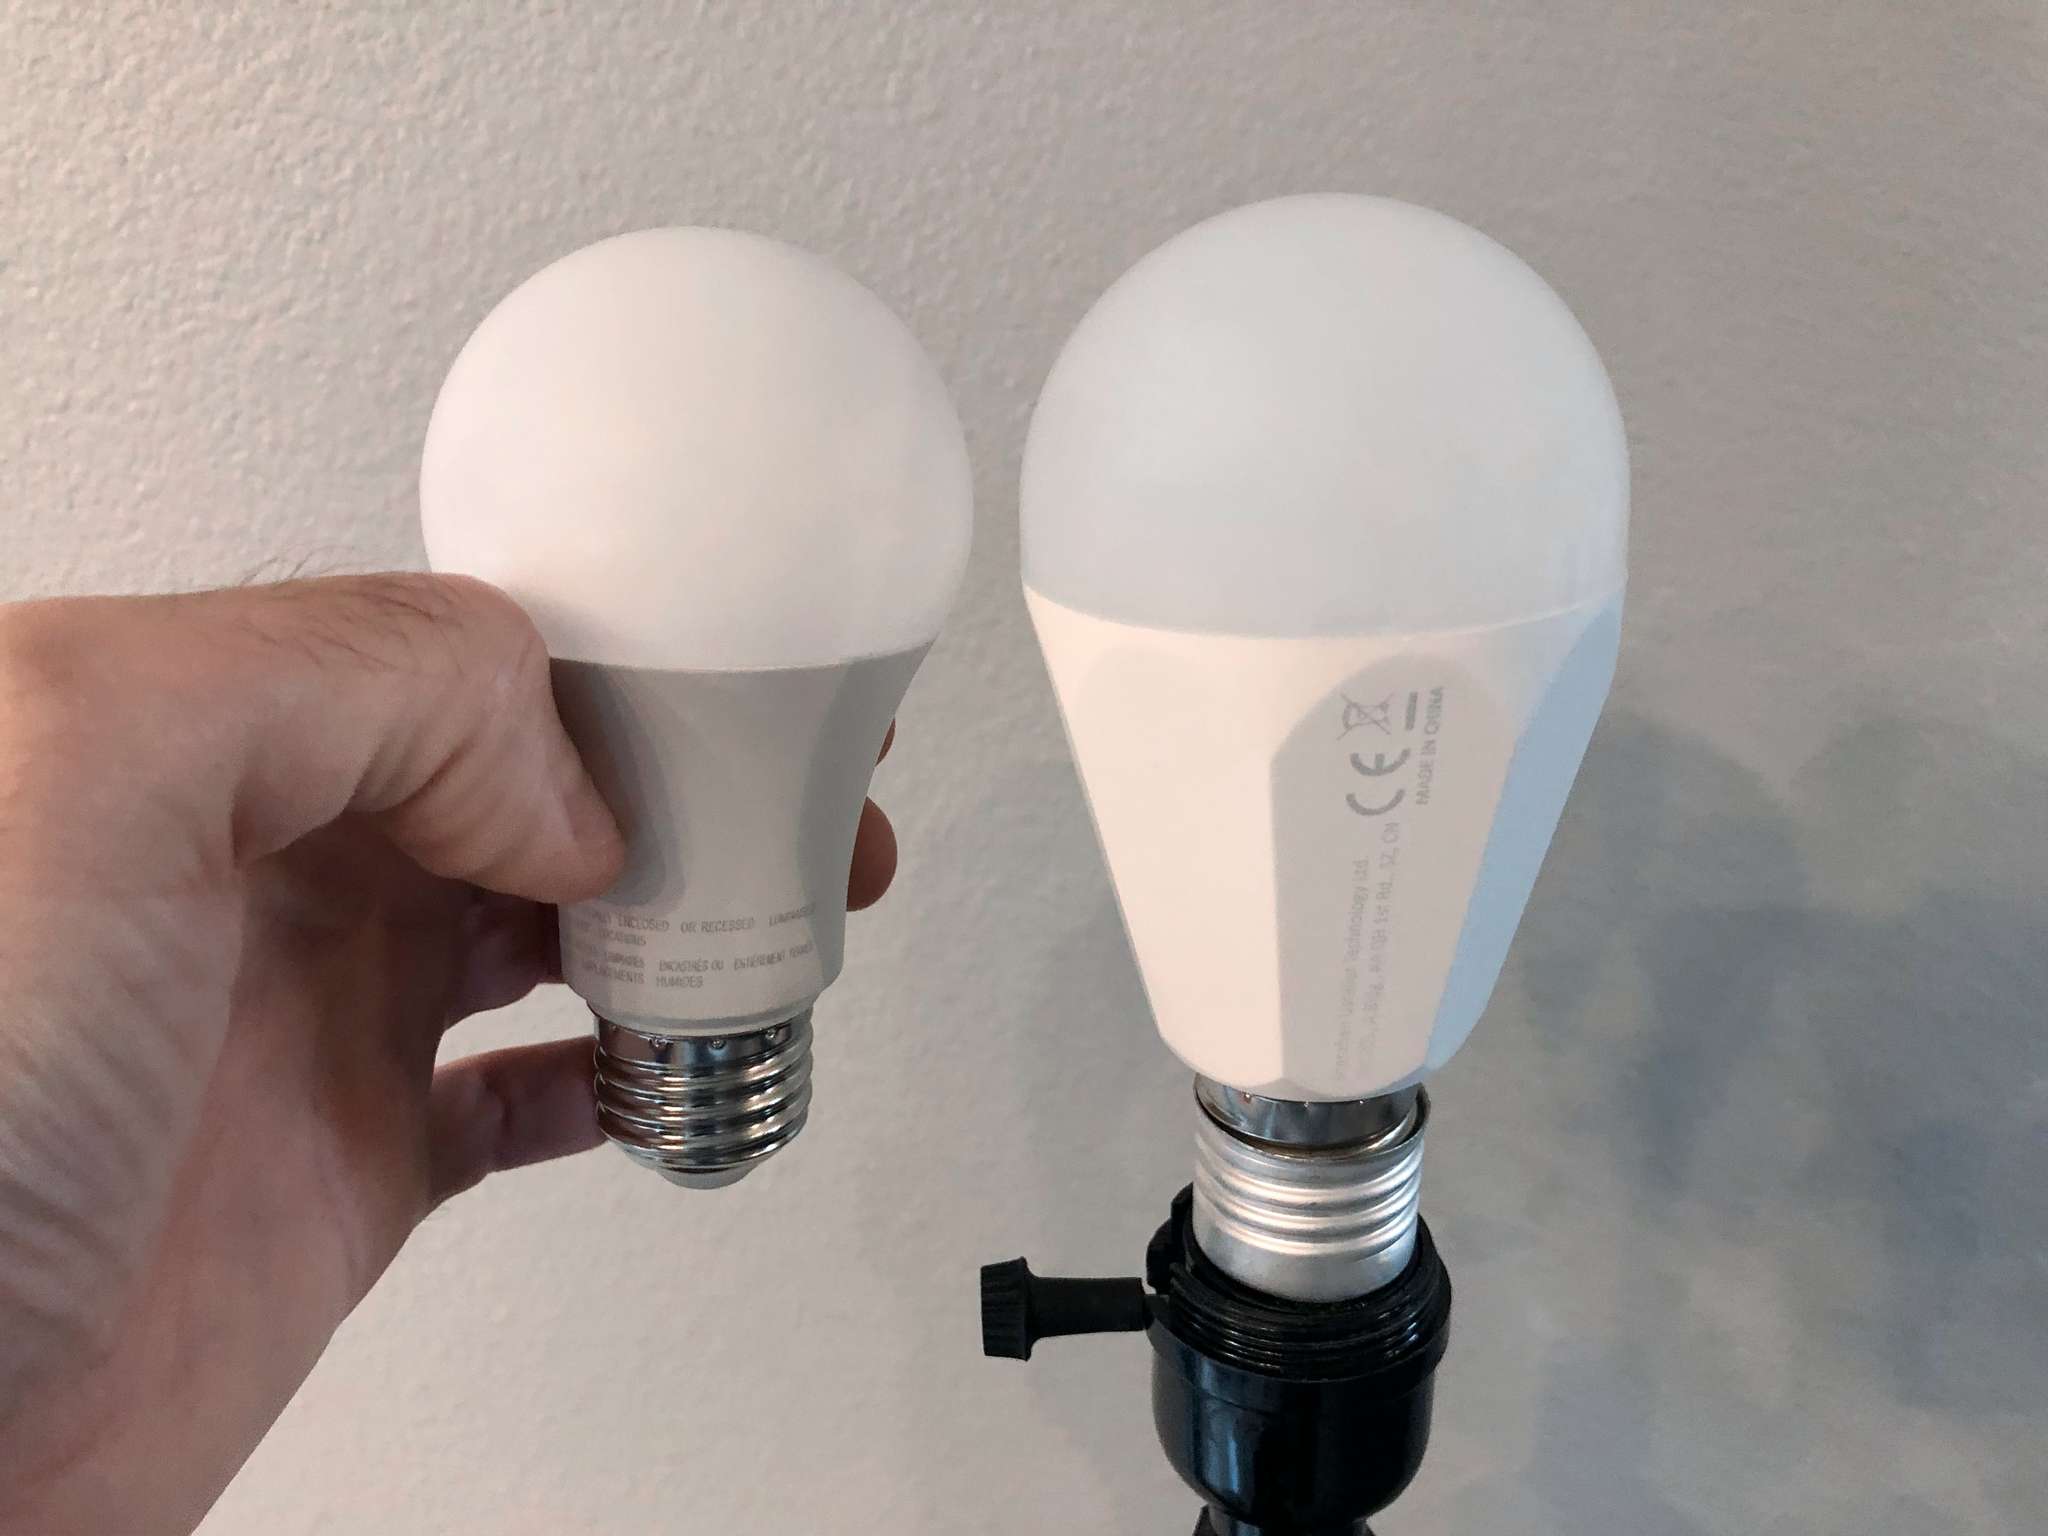 Novostella Smart Led Light Bulb Comparison